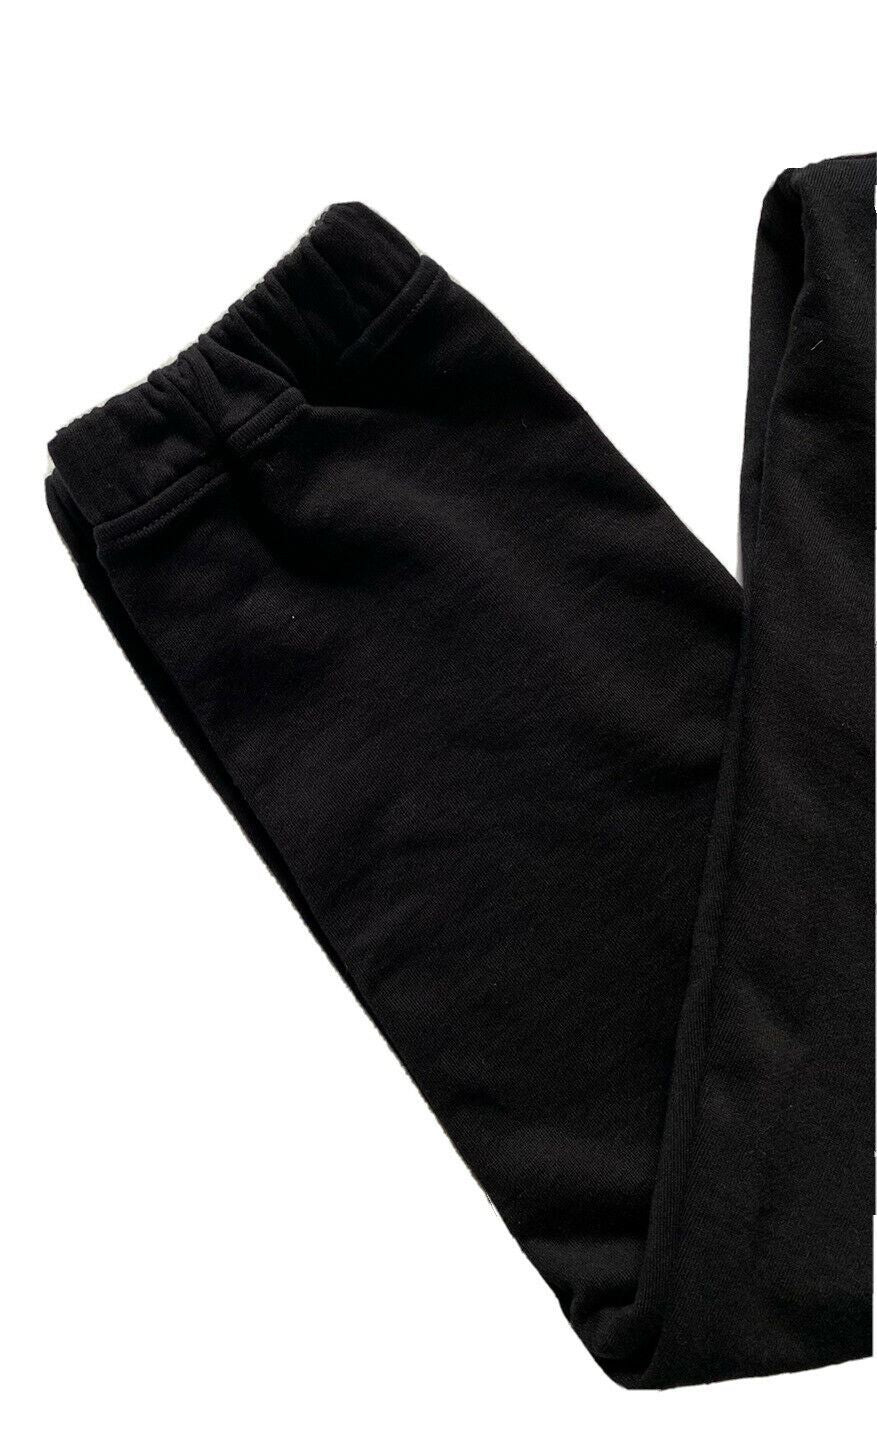 NWT $895 Versace Men's Medusa Logo Tailored Fit Black Activewear Pants L A86025